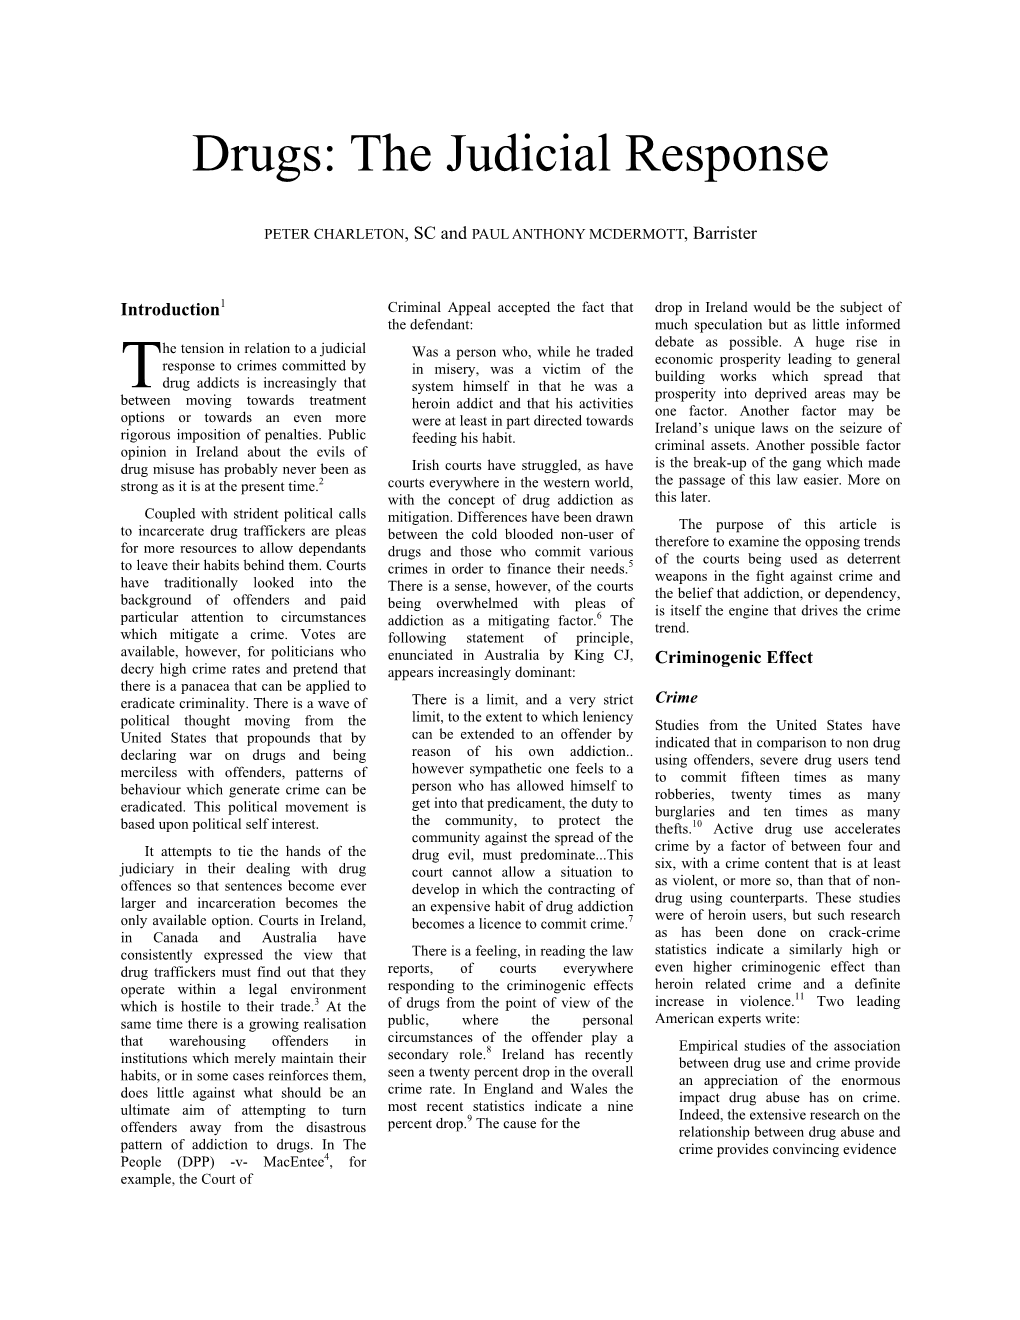 Drugs: the Judicial Response